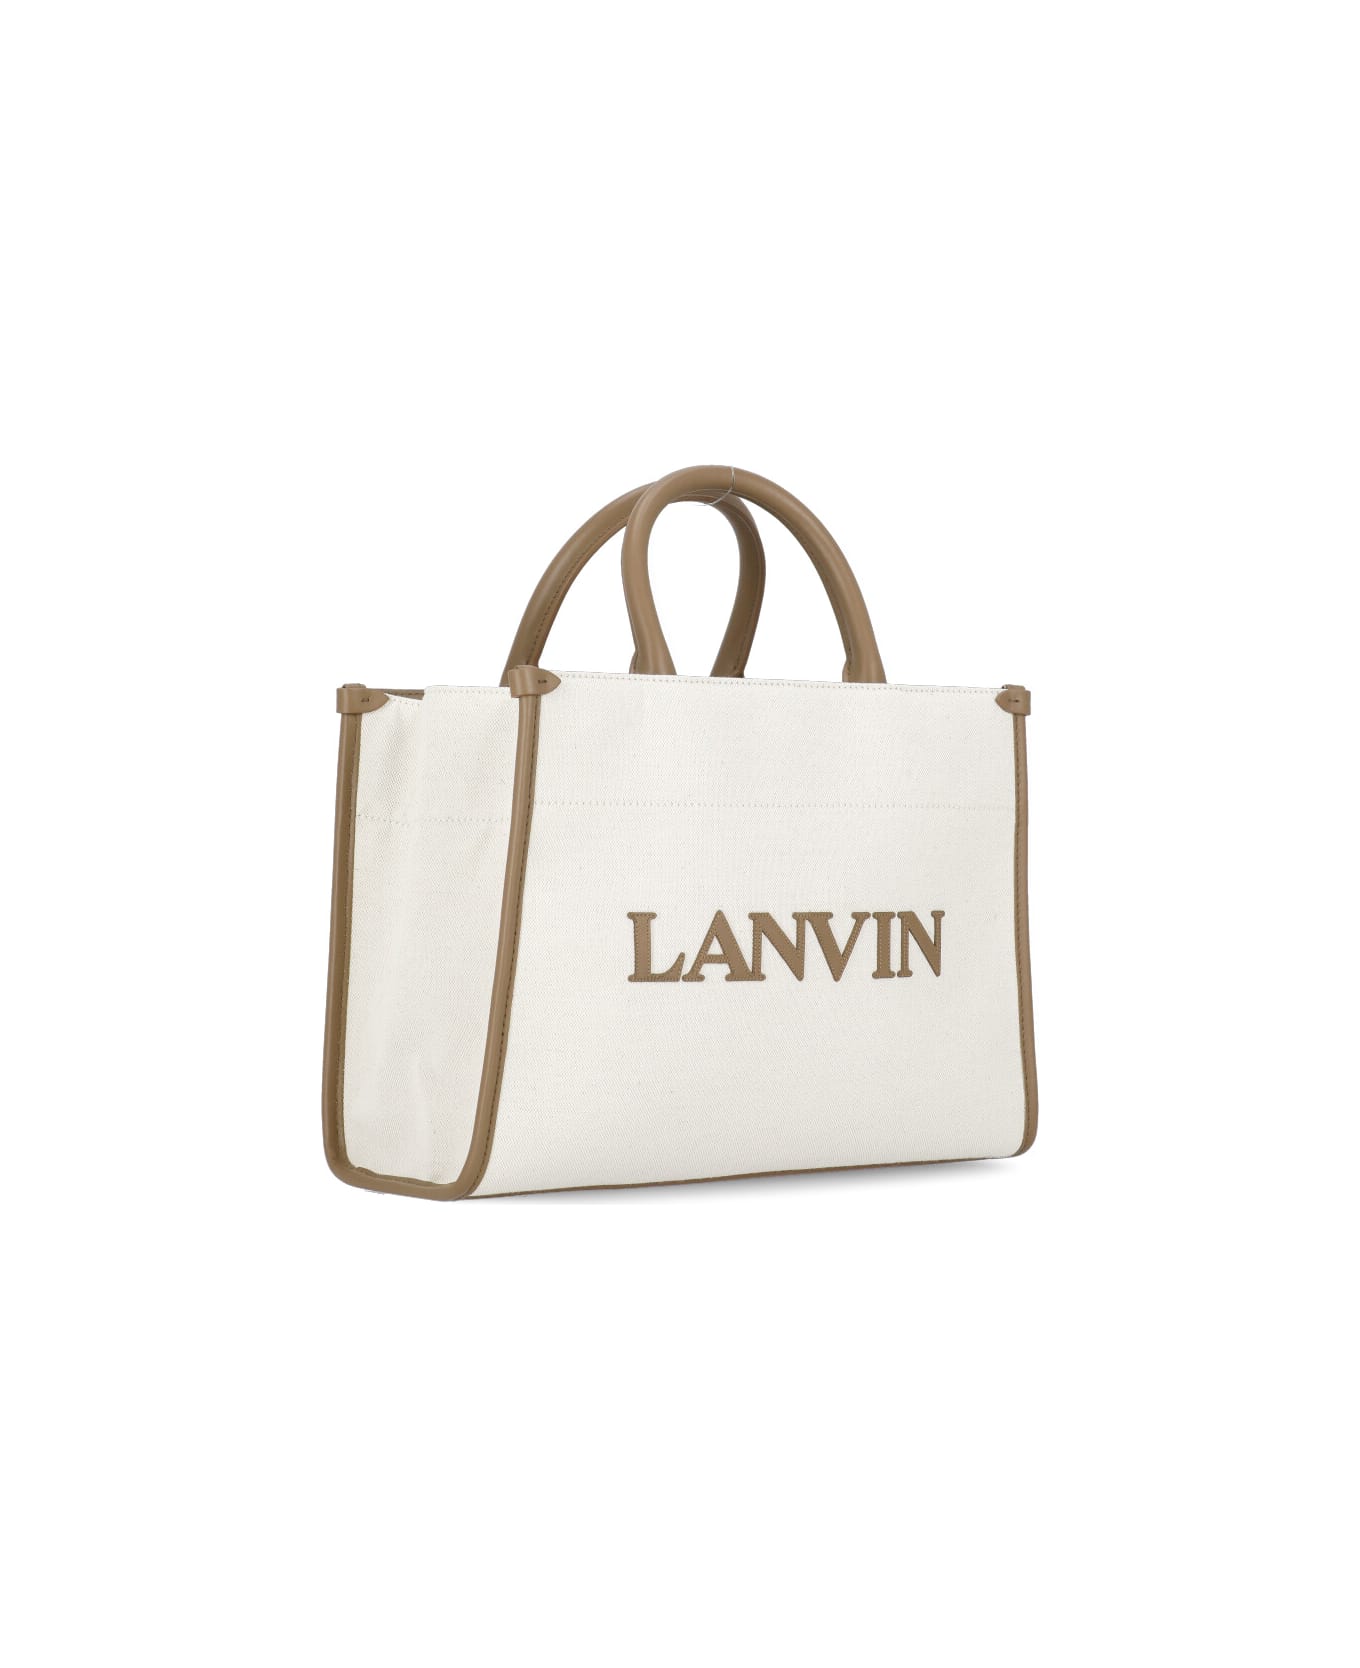 Lanvin Cotton And Linen Shopping Bag - Beige